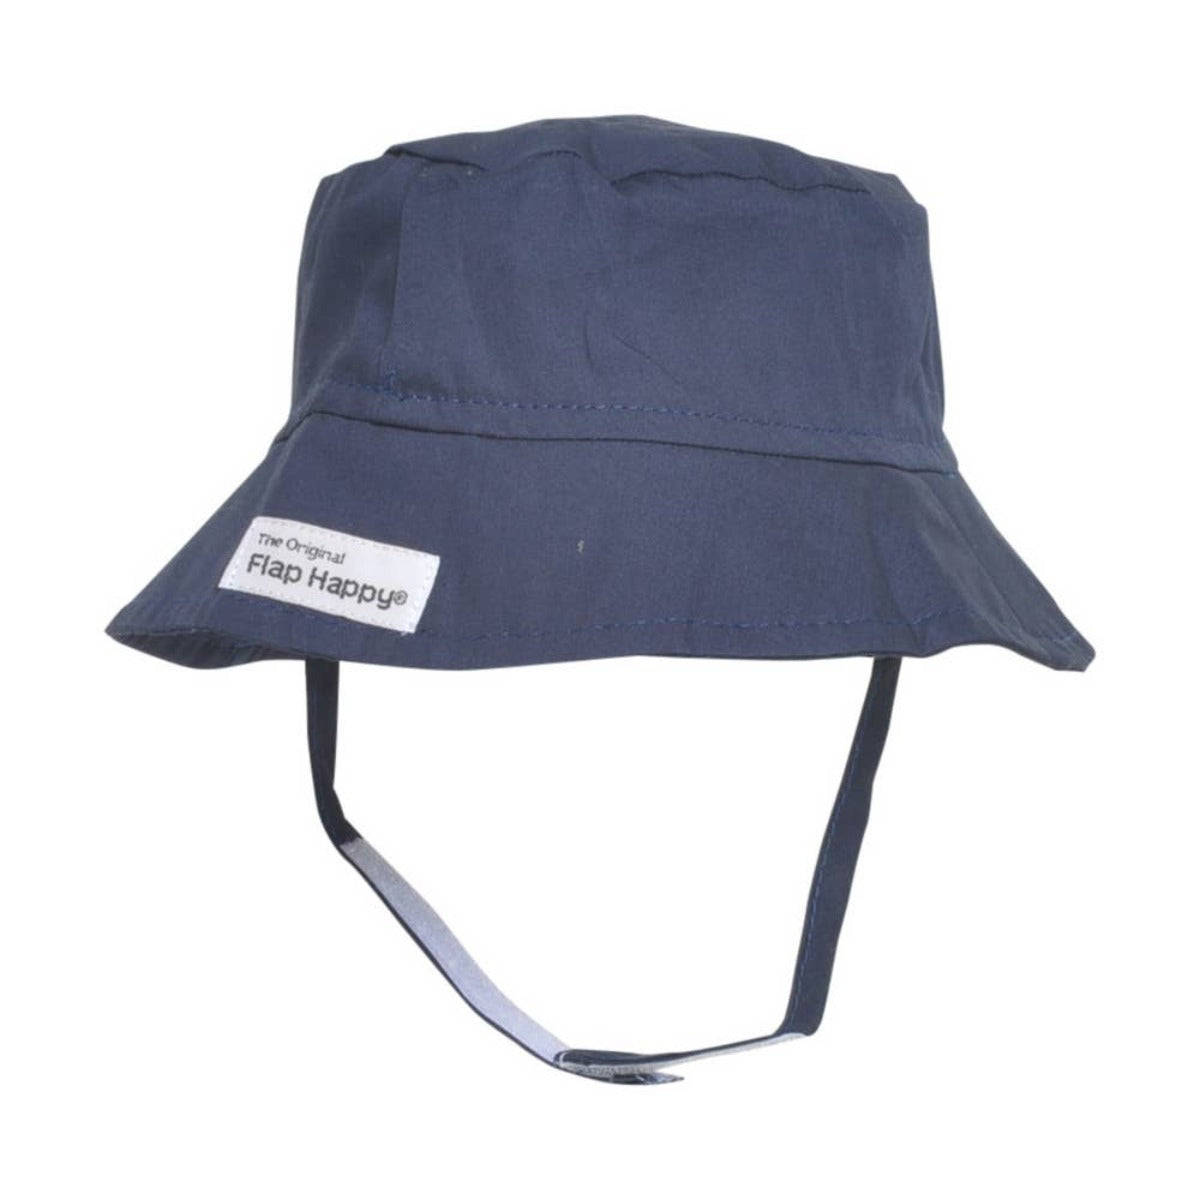 Kids Navy Blue Classic Bucket Flap Happy Sun Hat